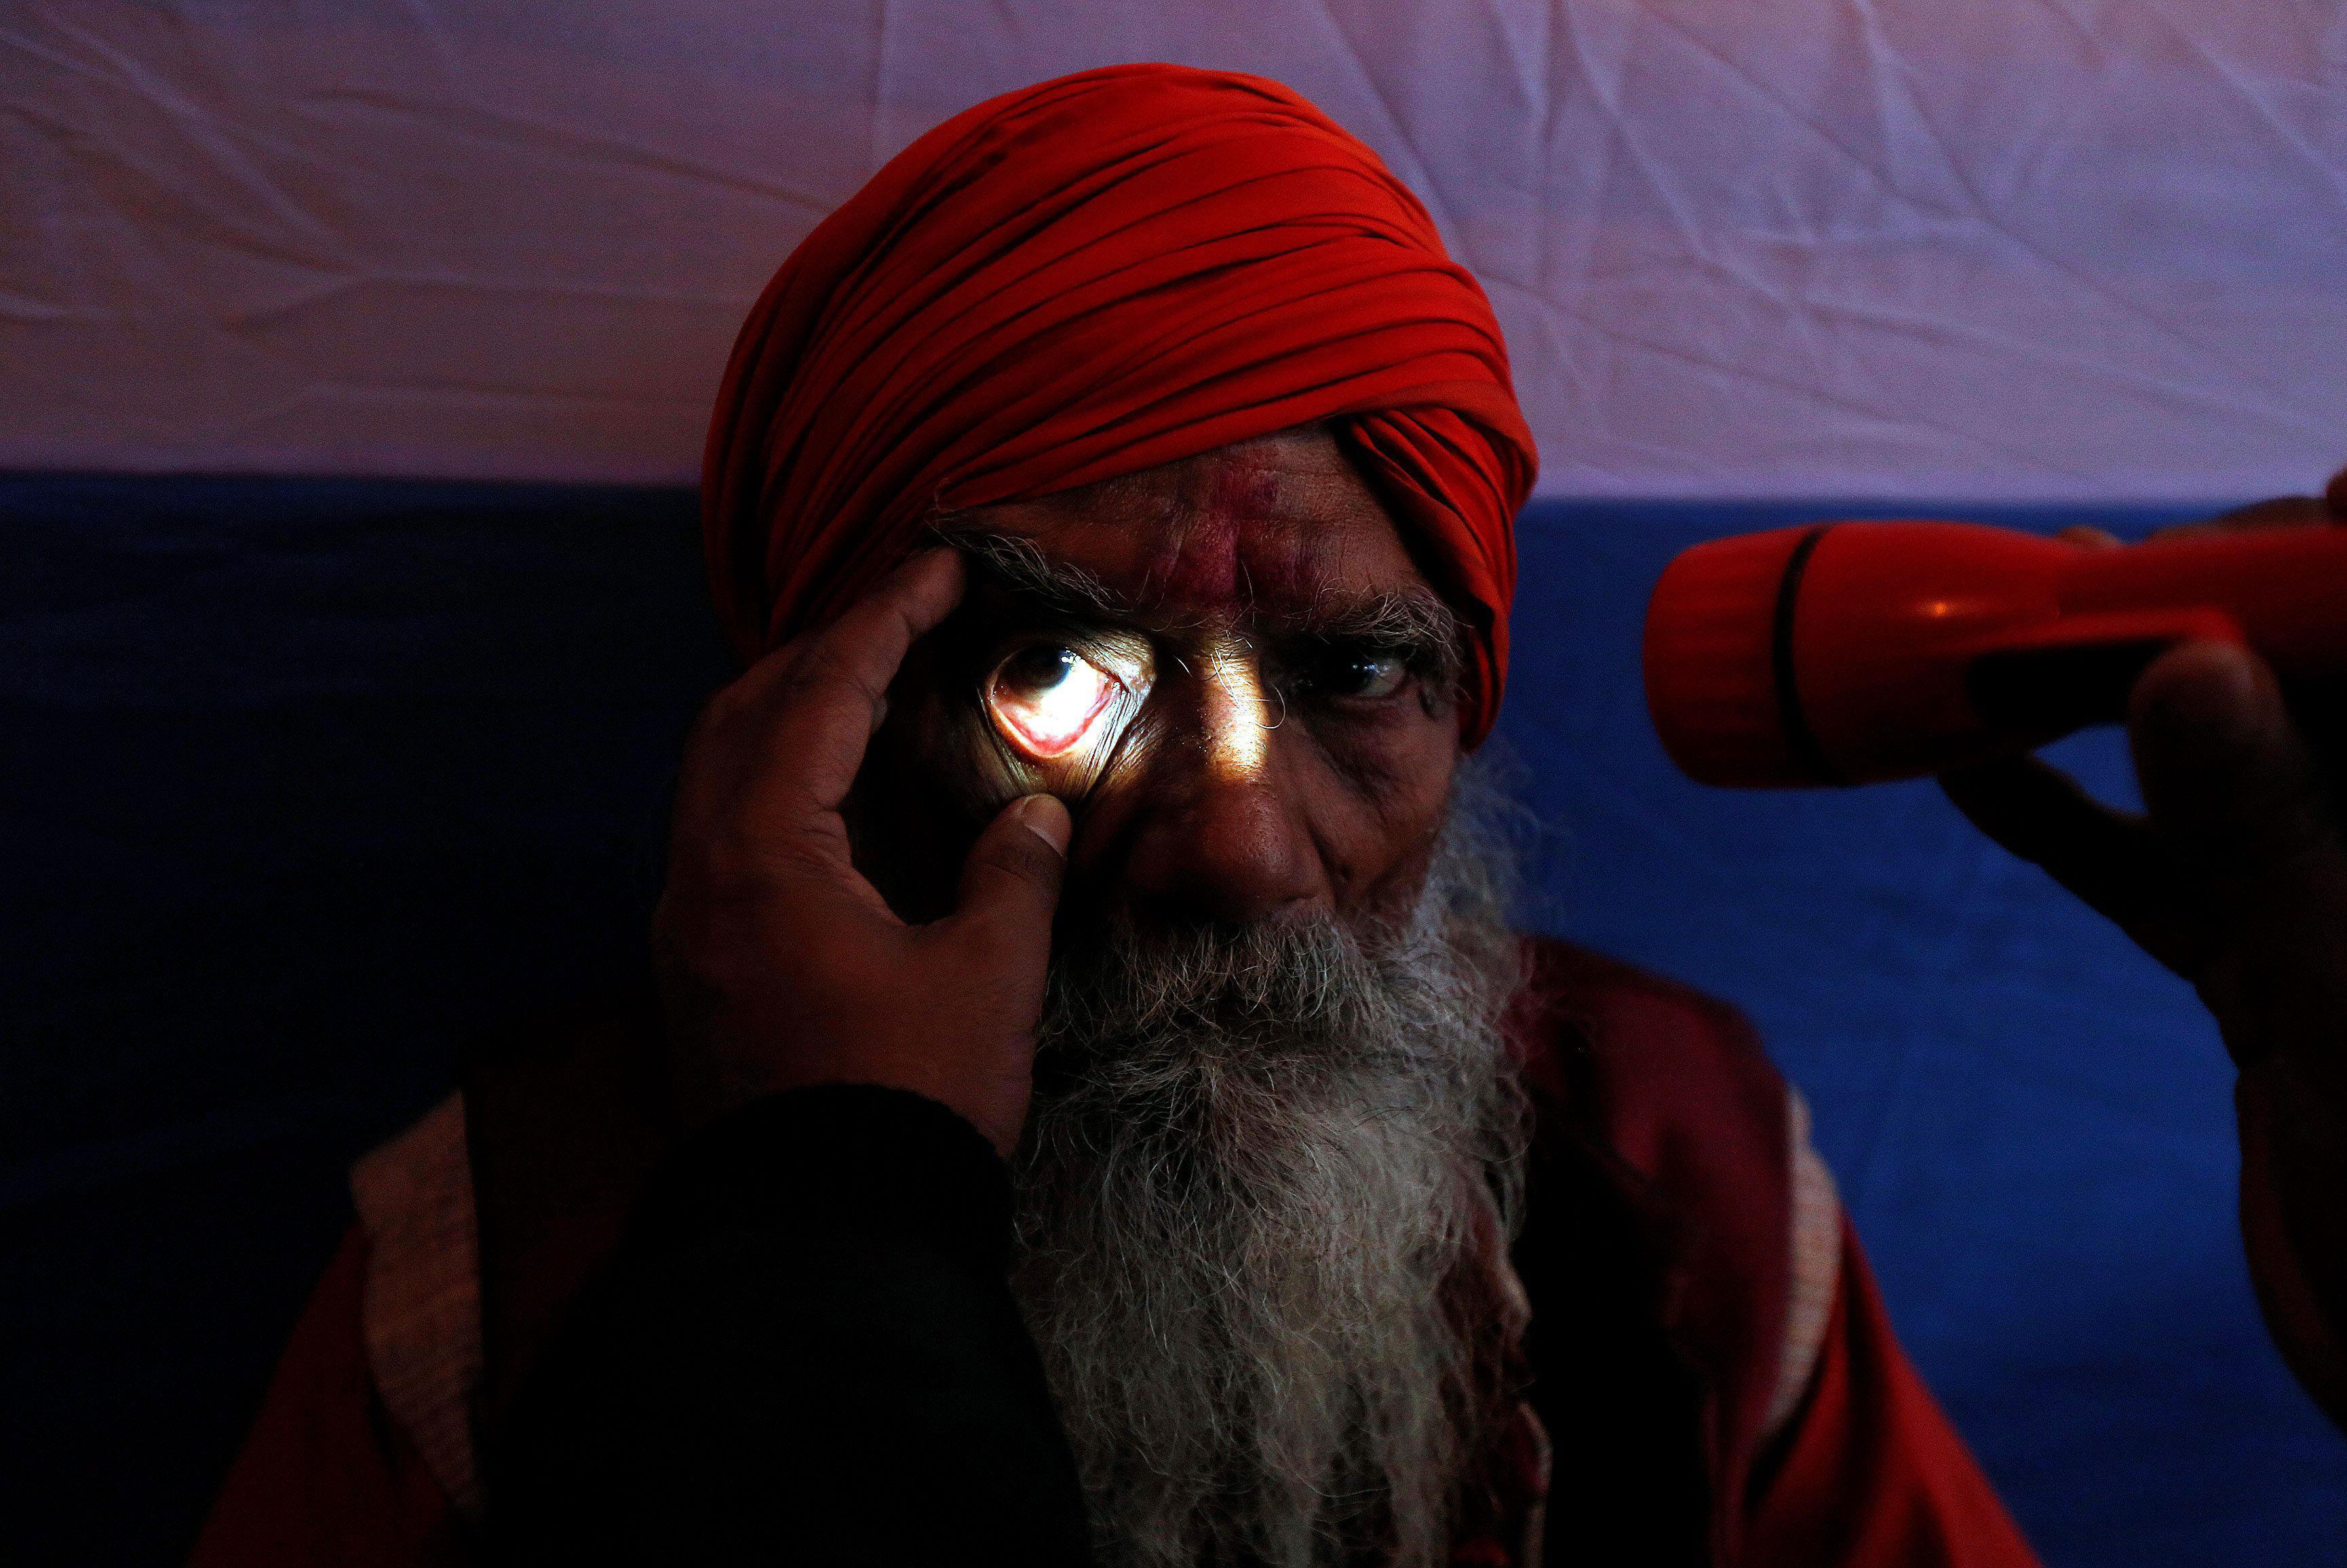 A Sadhu or a Hindu holy man undergoes an eye examination at a free eye-care camp organised by social